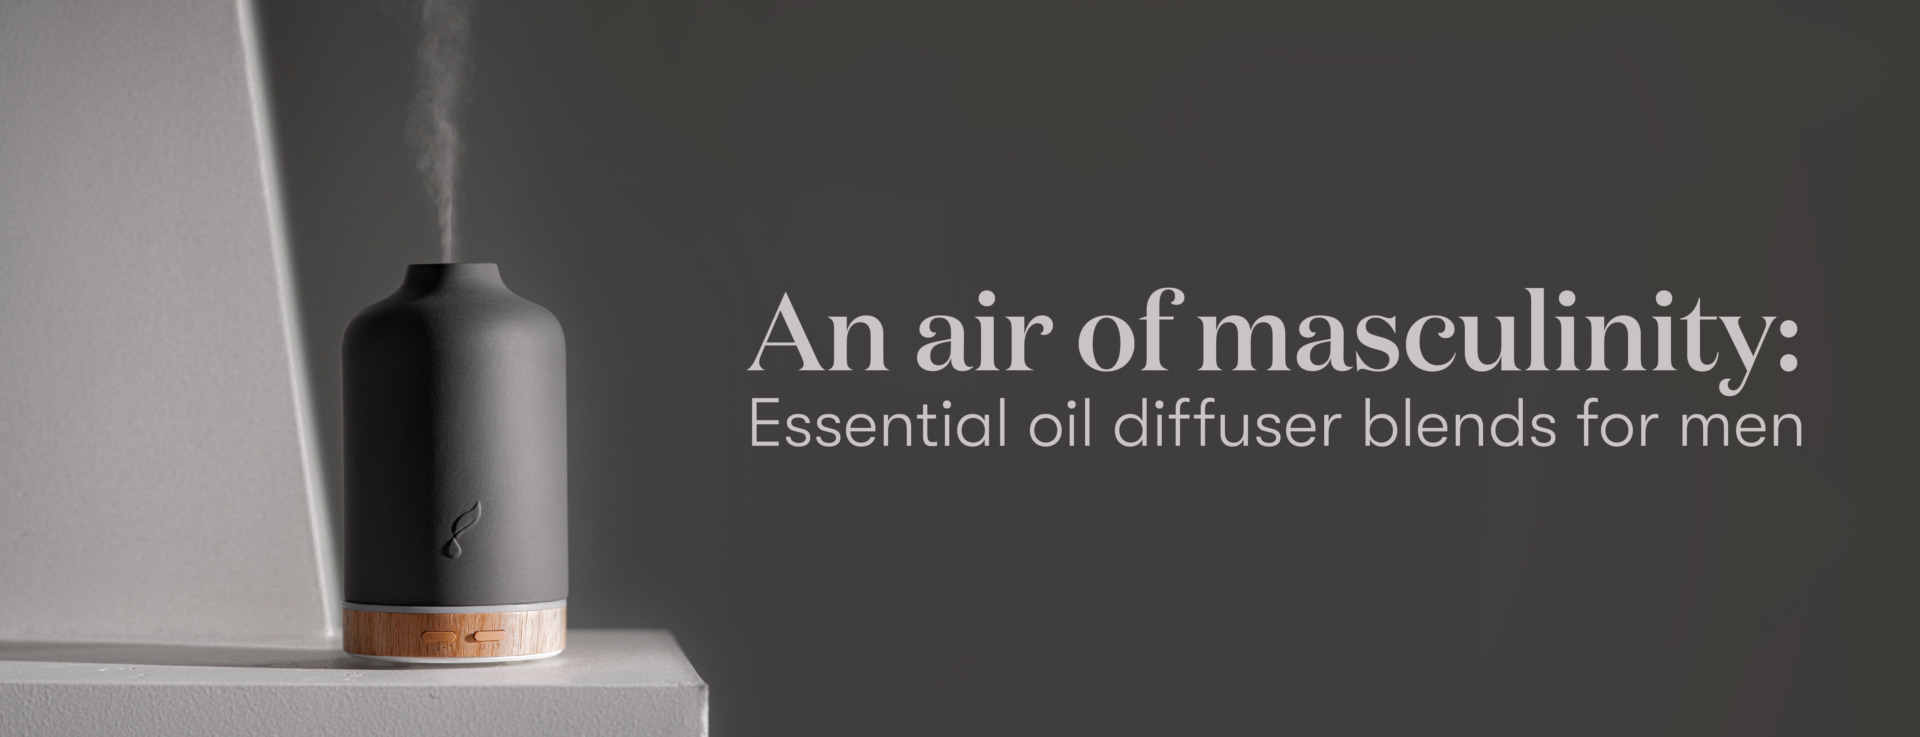 Essential Oil Diffuser Blends for Men - Best Masculine Scents